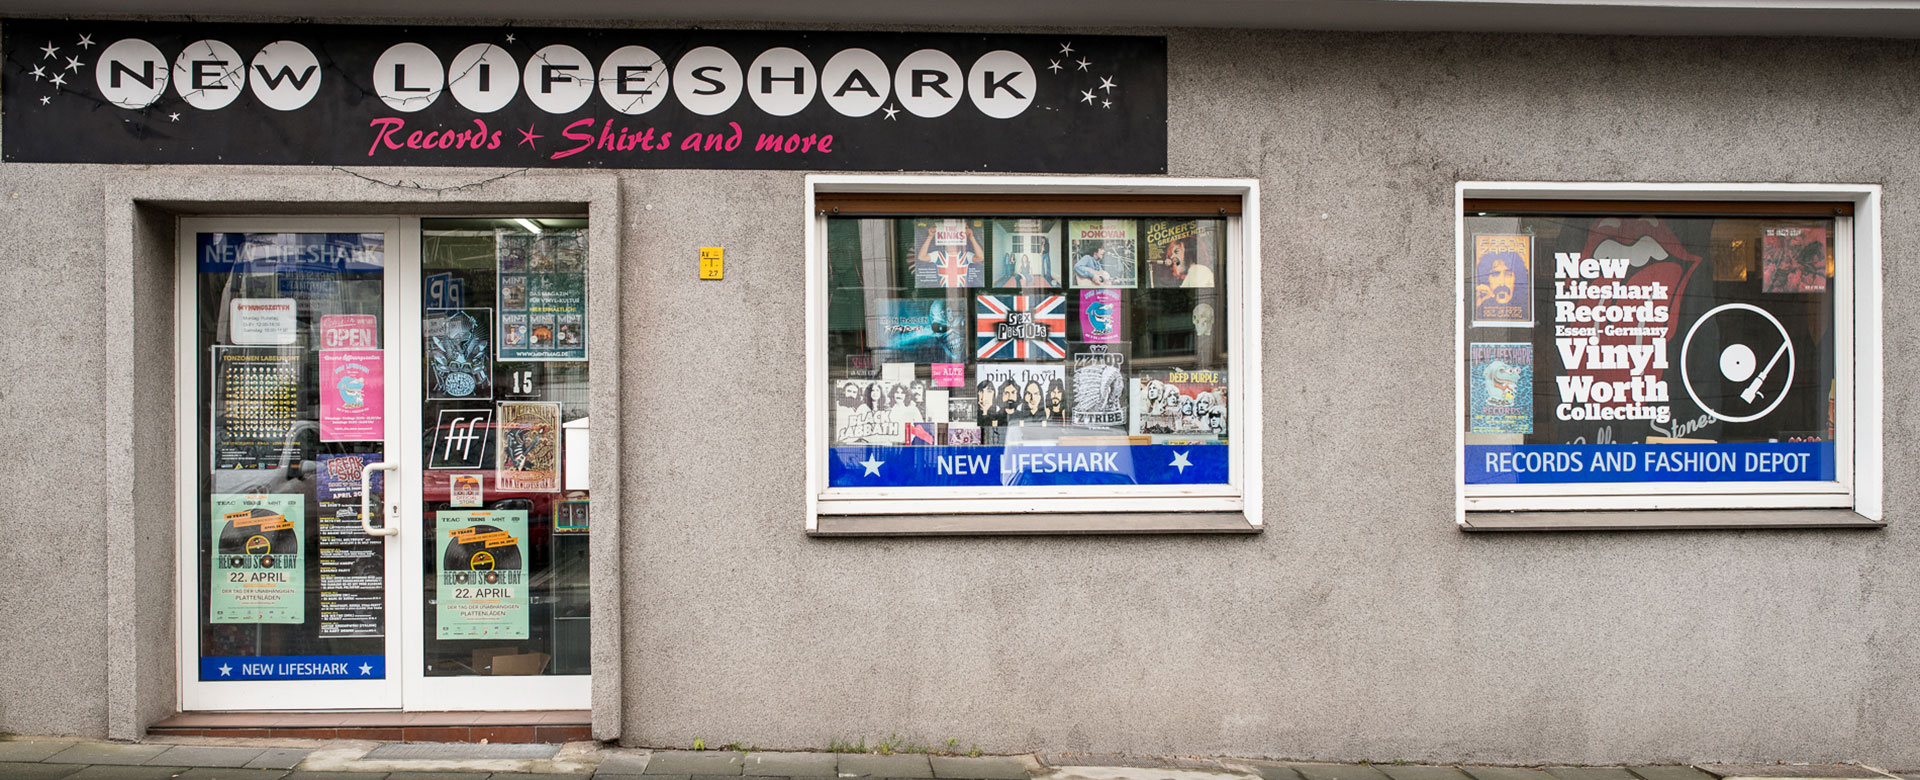 New Lifeshark Records - Laden / Shop